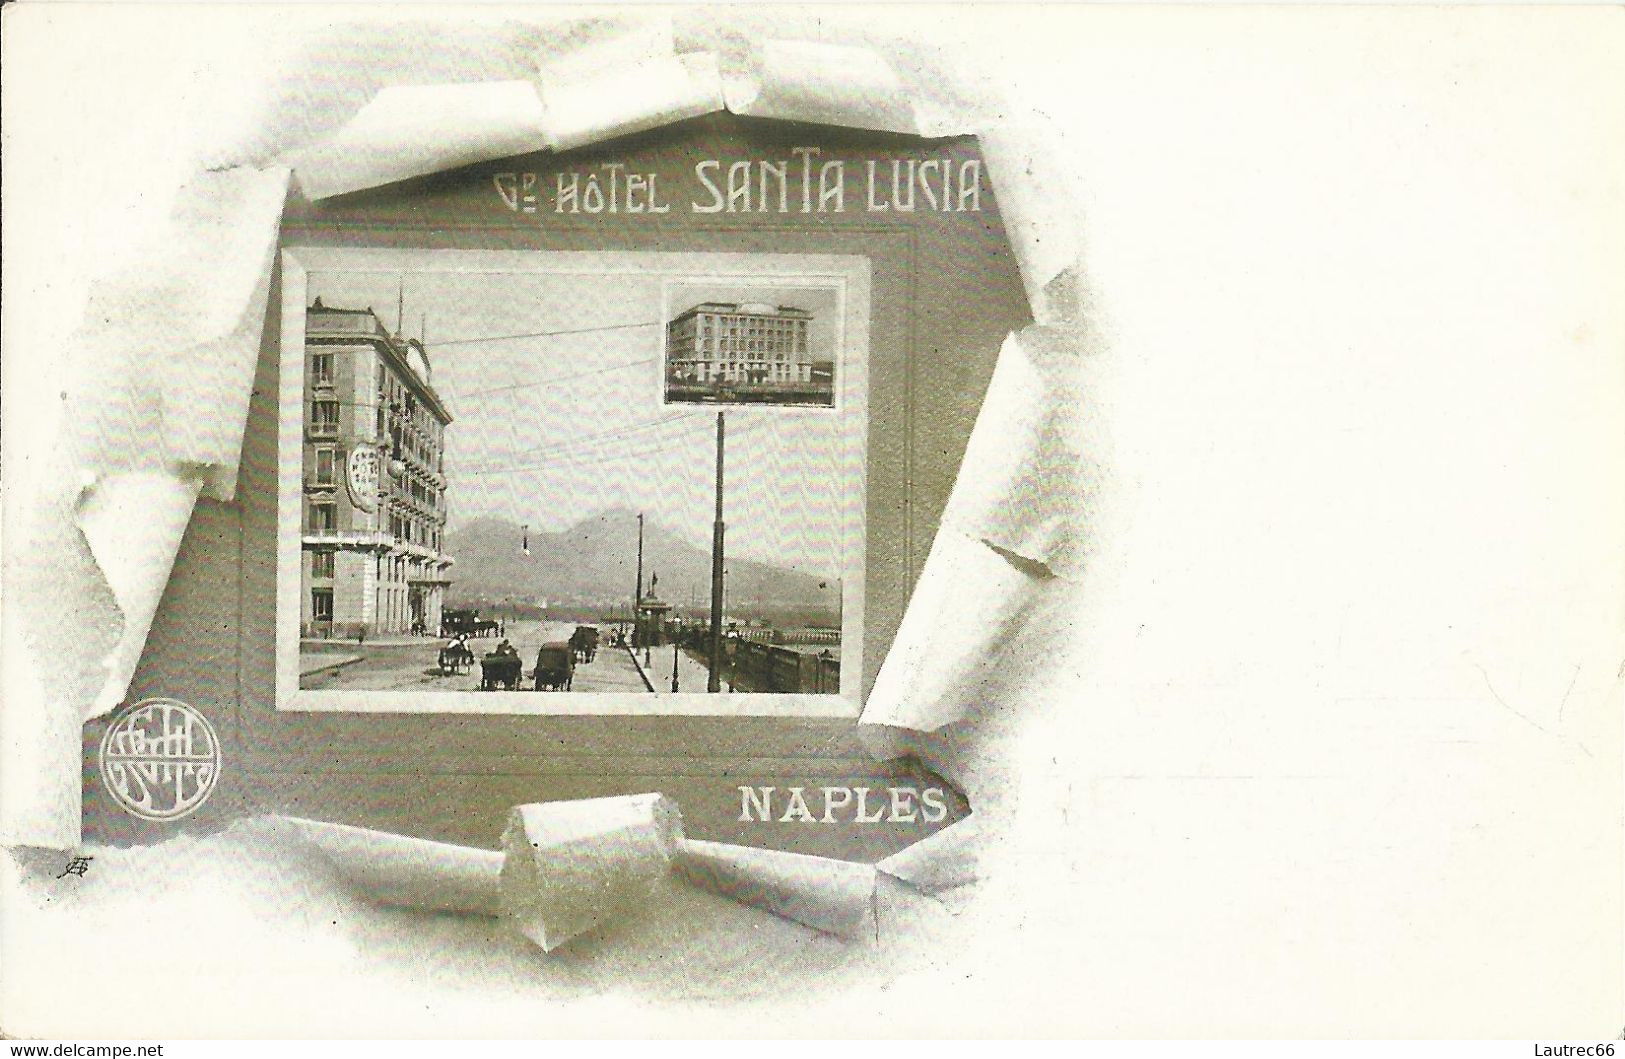 NAPOLI - NAPLES - Gd Hôtel Santa Lucia - Napoli (Naples)